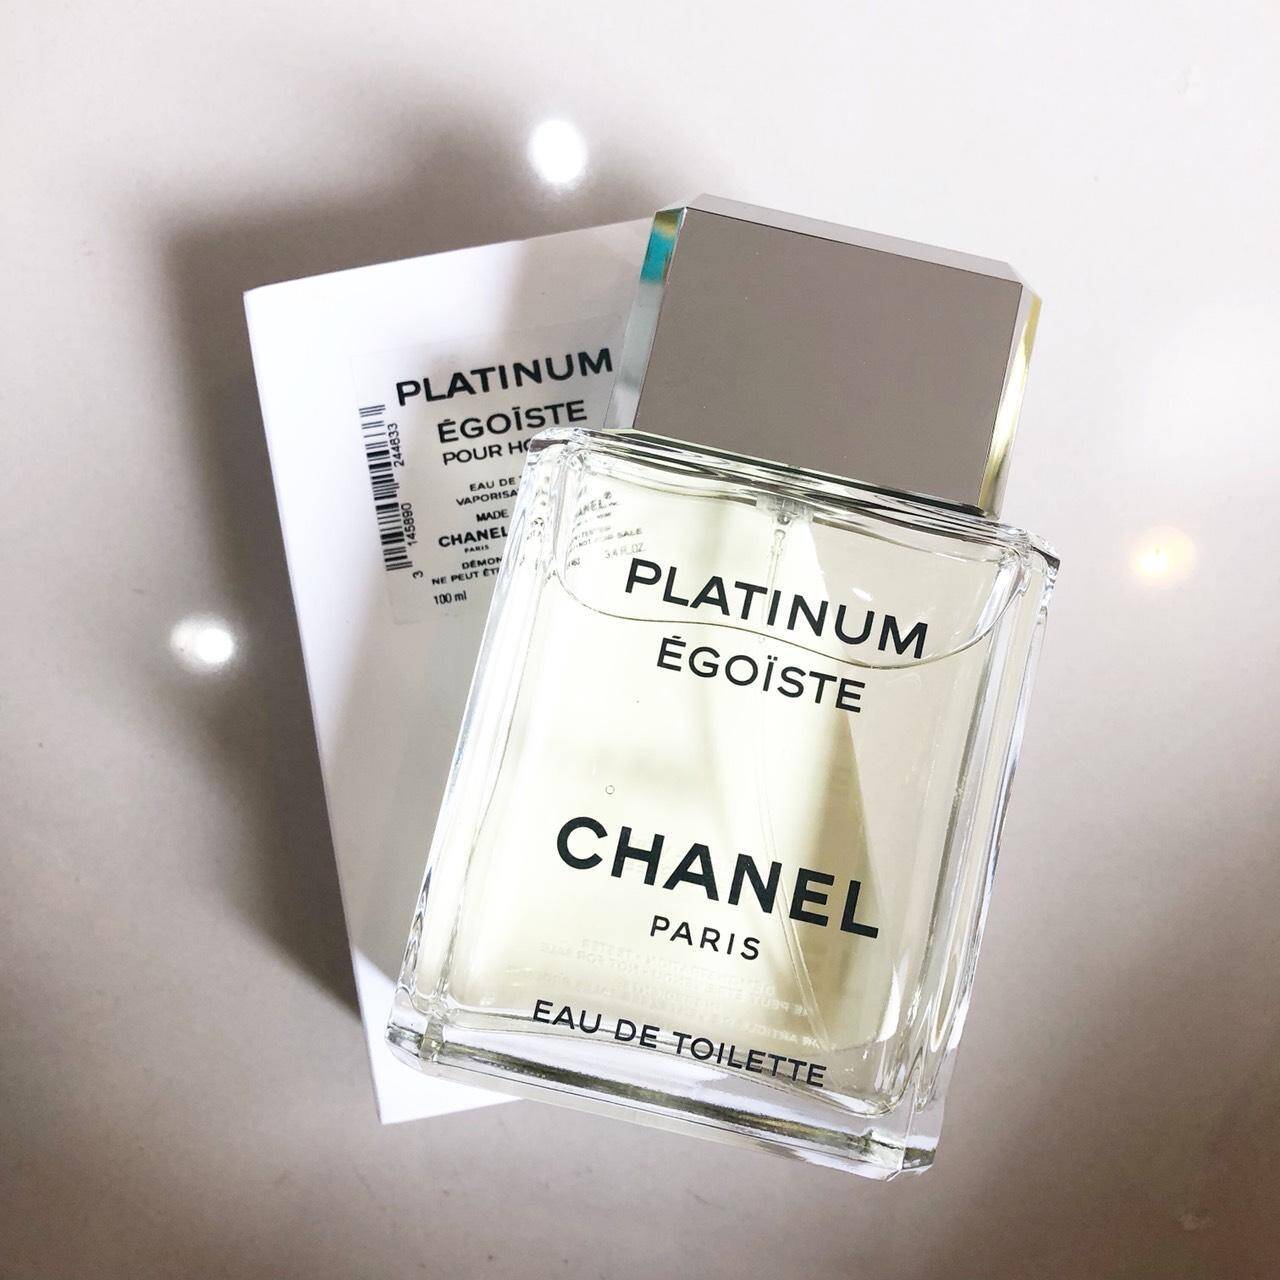 Nước hoa nam Chanel Platinum Égoïste Pour Homme EDT 50ml100ml